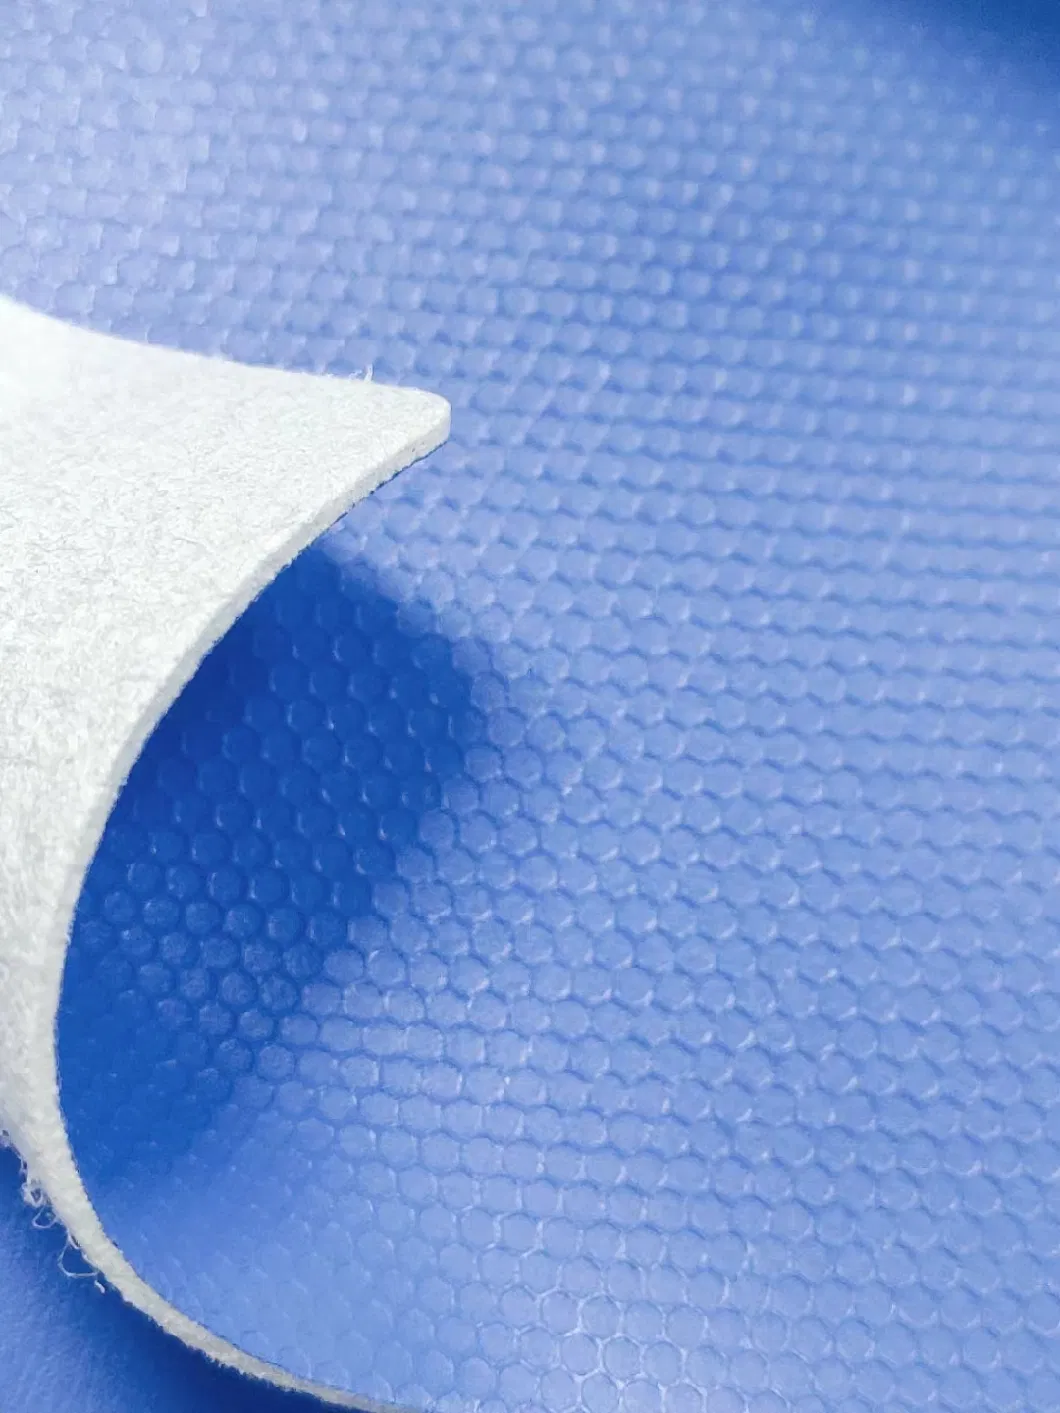 Fabric PVC PU Artificial Leather for Sofa Furniture Leather Microfiber Material